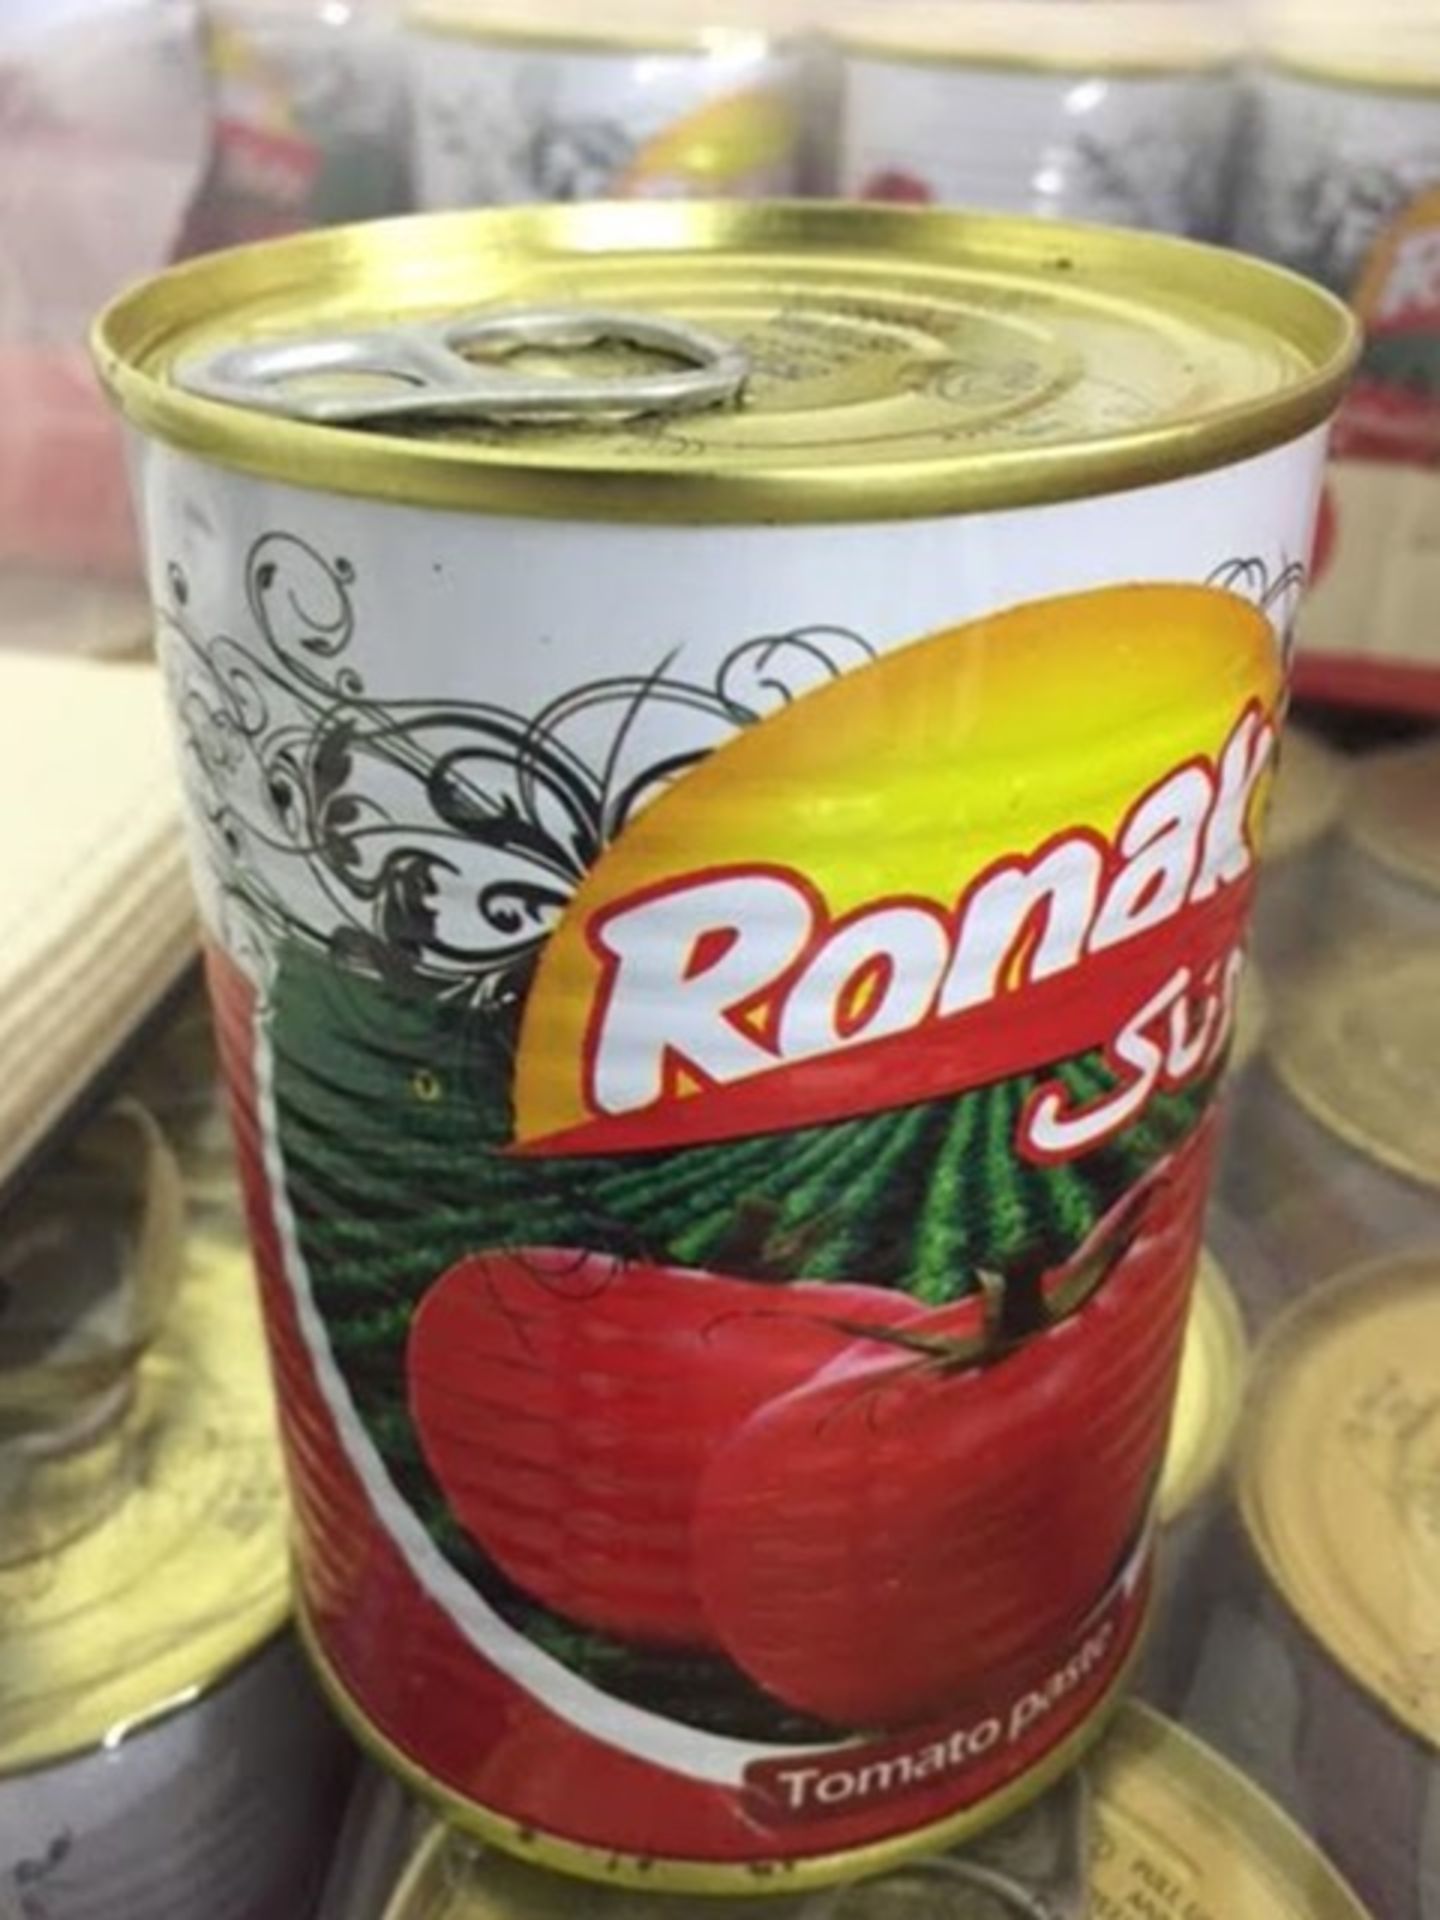 2,400 x Tins of Ronak Tomato Paste - Includes 100 x Cases of 24 x Tins of 400gr Tomato Paste - - Image 2 of 4